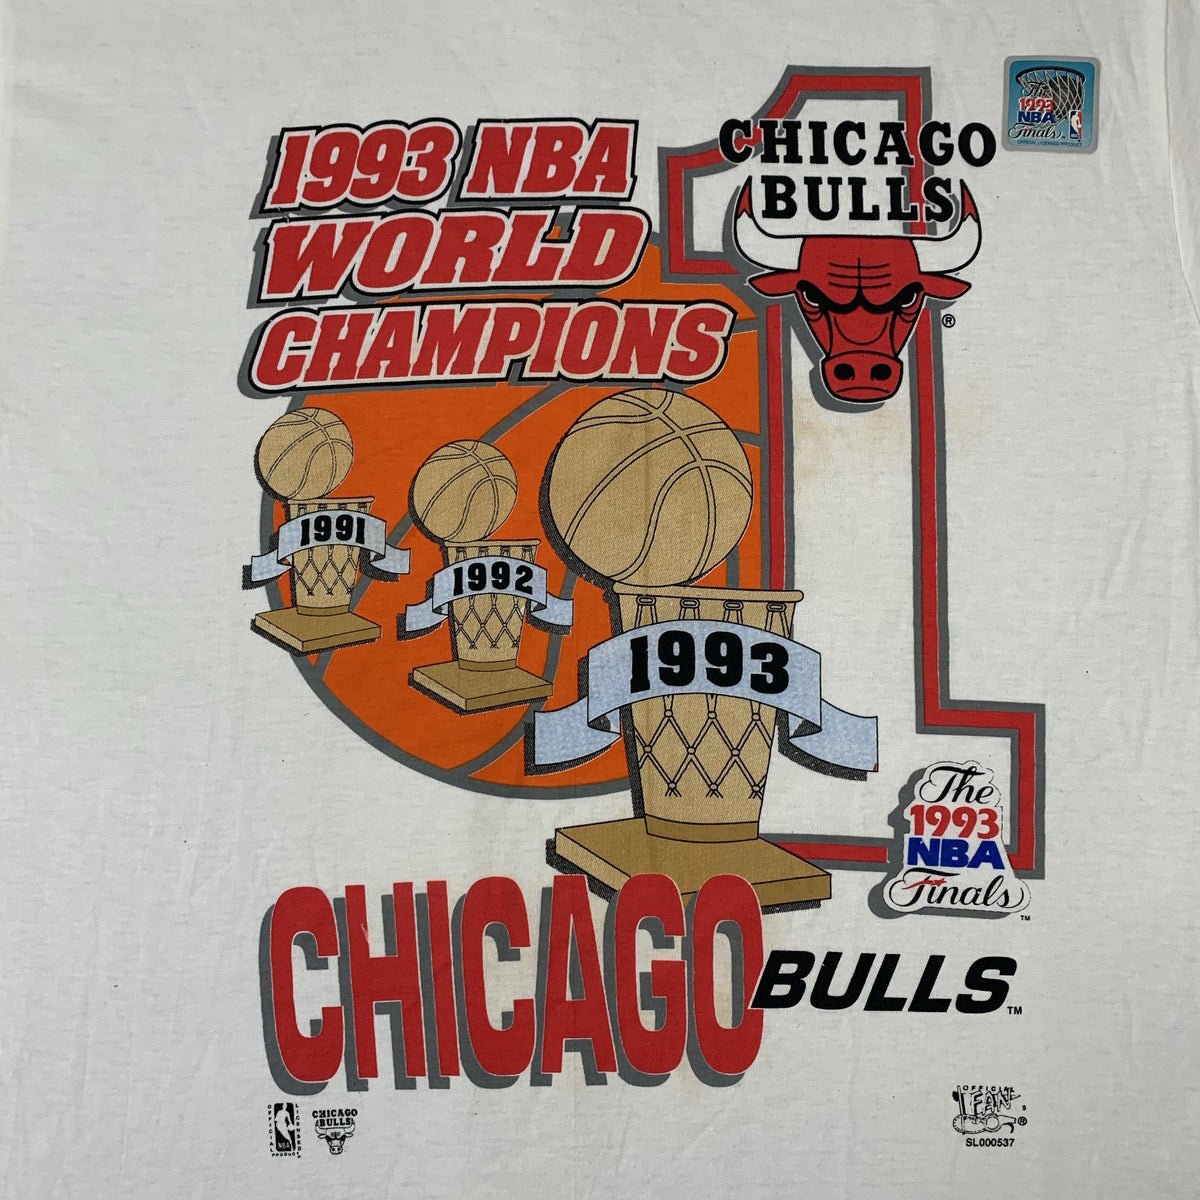 Vintage Original Chicago Bulls 1993 World Champions T-Shirt detail